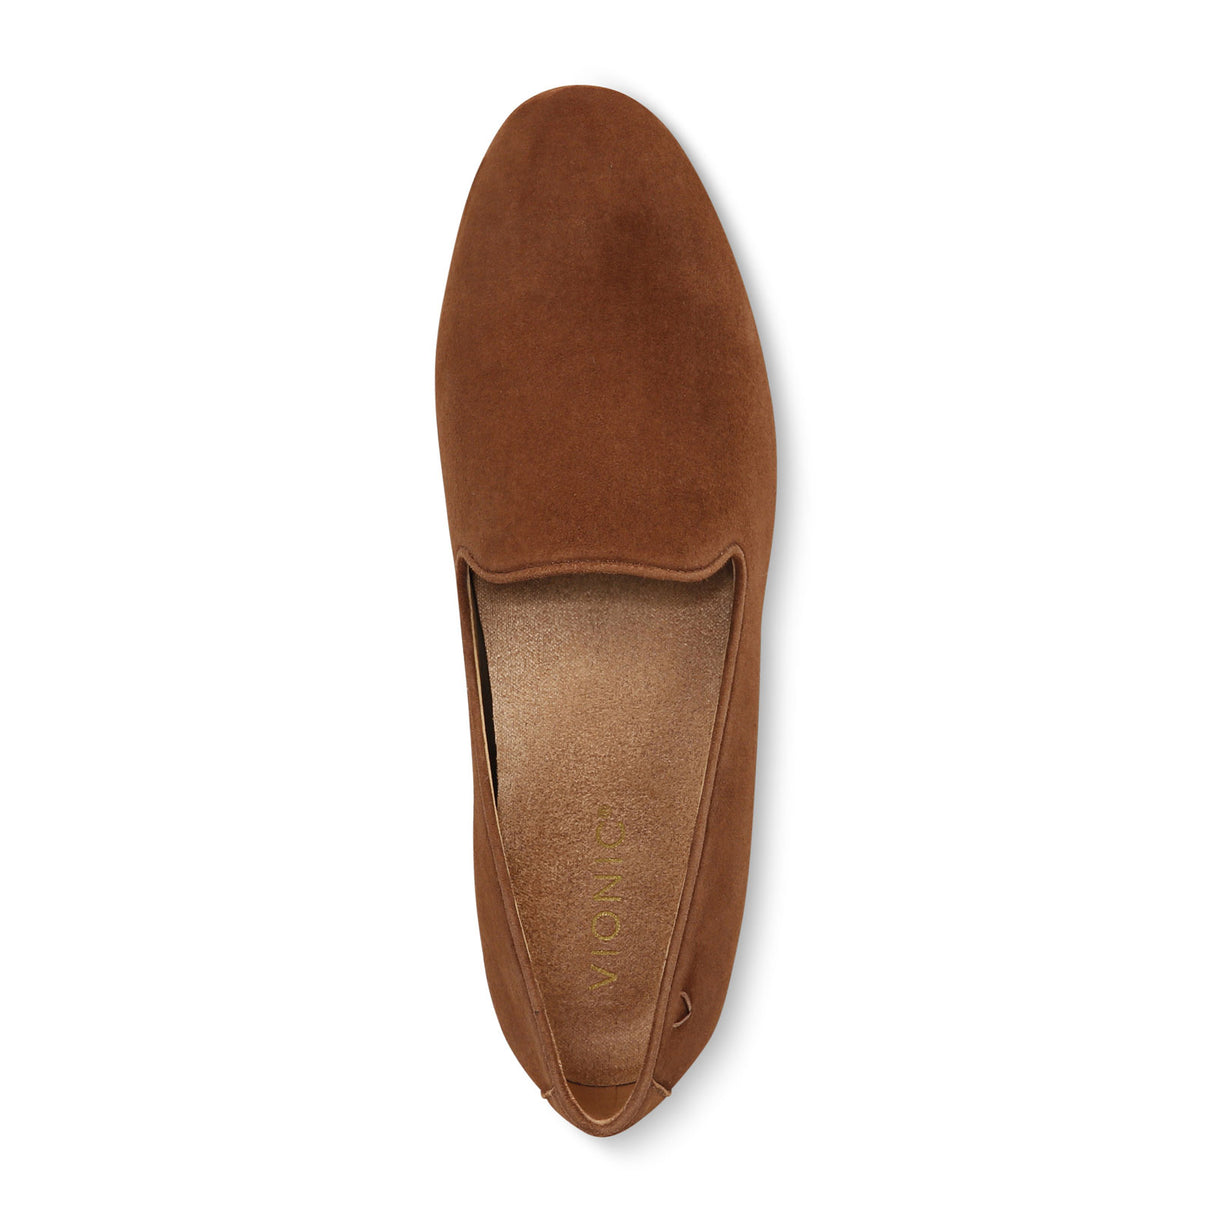 Vionic Willa II (Women) - Brown Suede Dress-Casual - Flats - The Heel Shoe Fitters